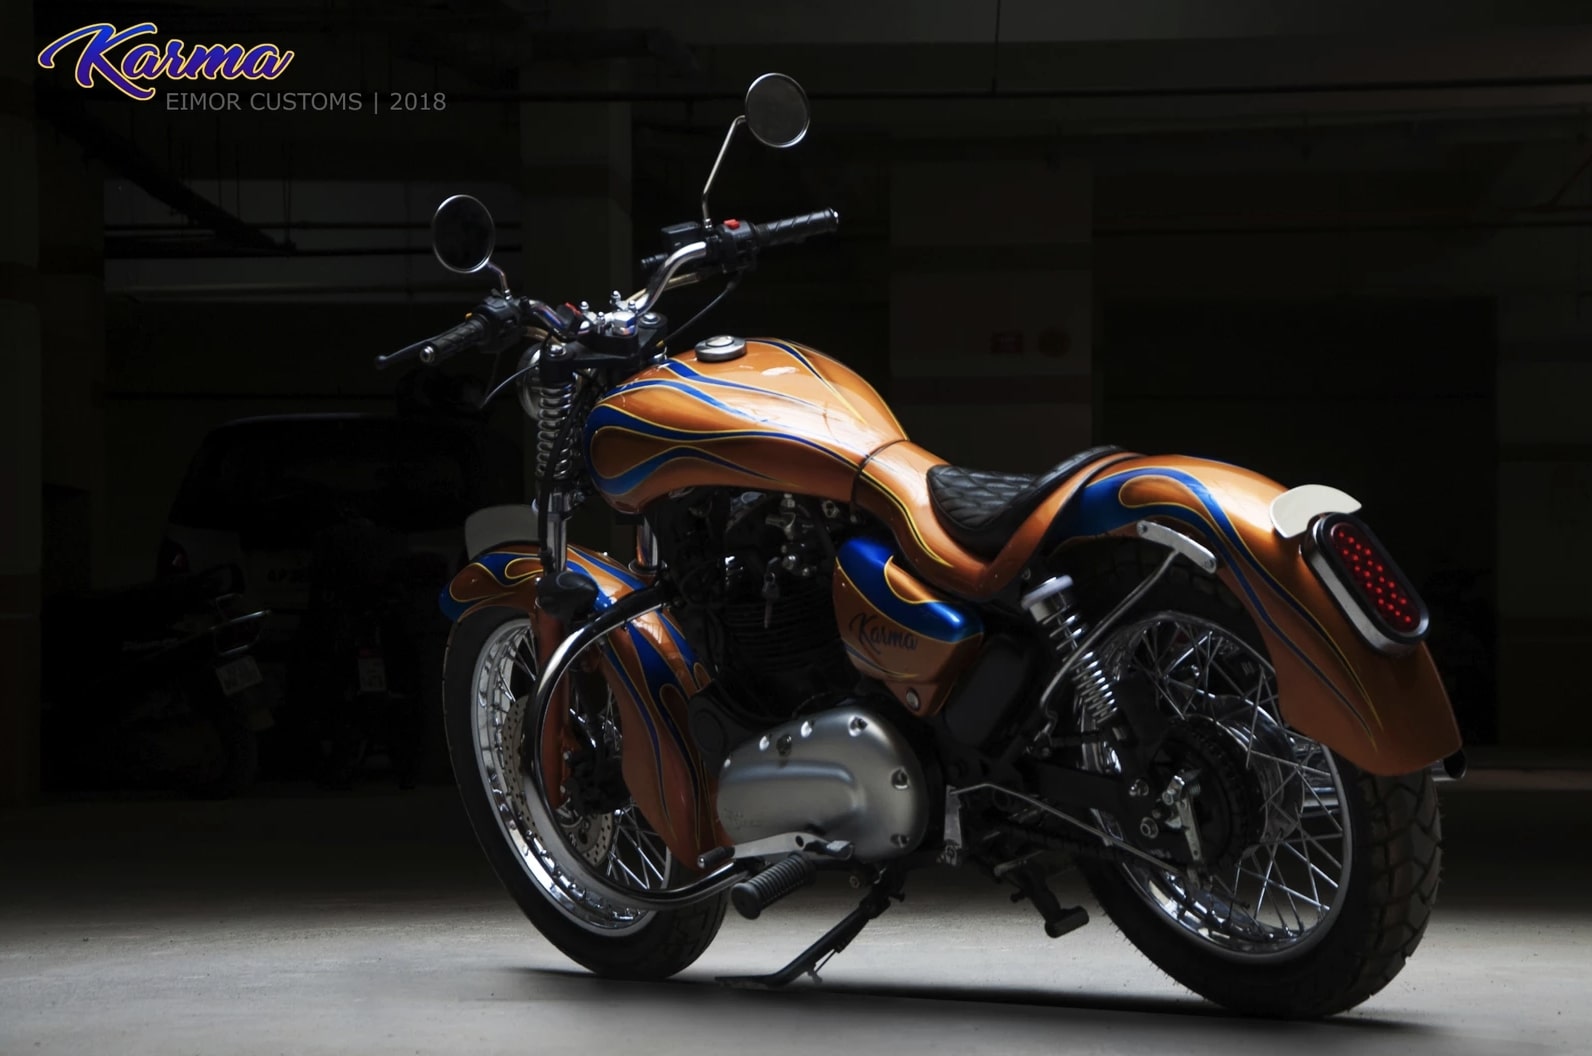 Meet Karma 350 - Based on the Royal Enfield Thunderbird Motorcycle - image